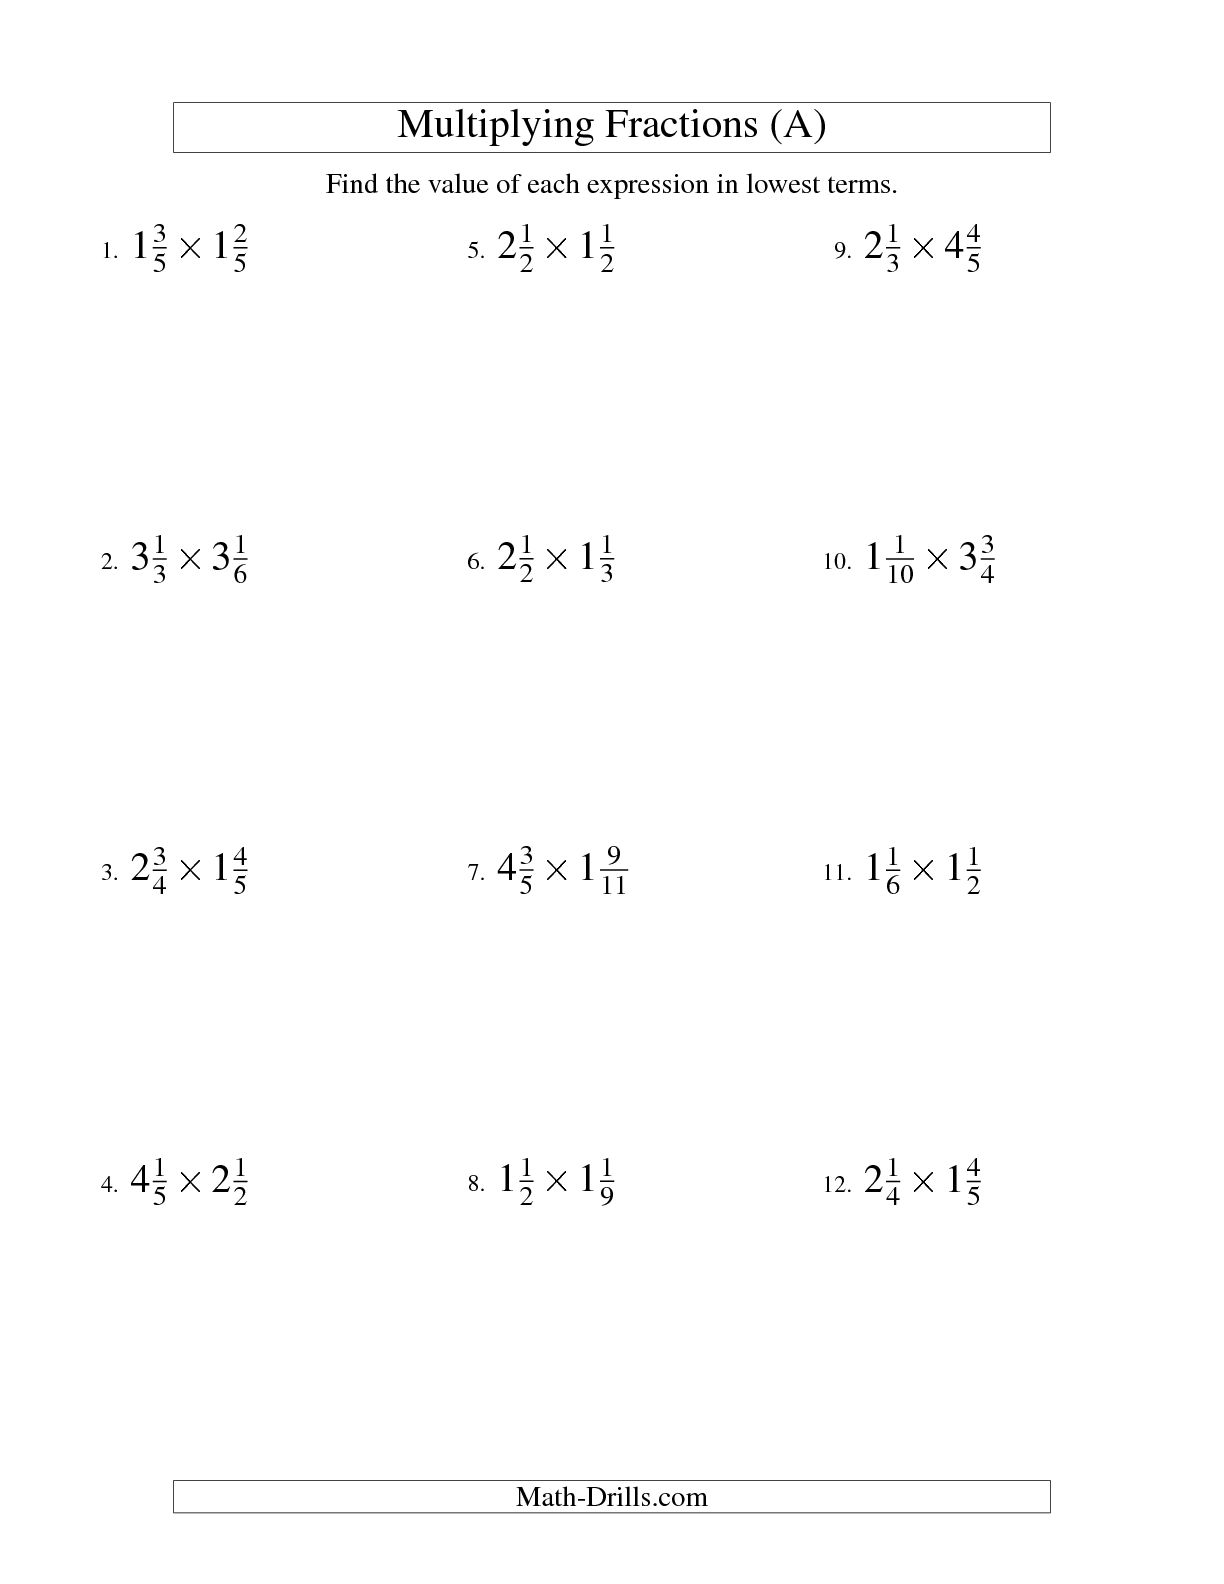 Mixed Fraction Multiplication Worksheets Image